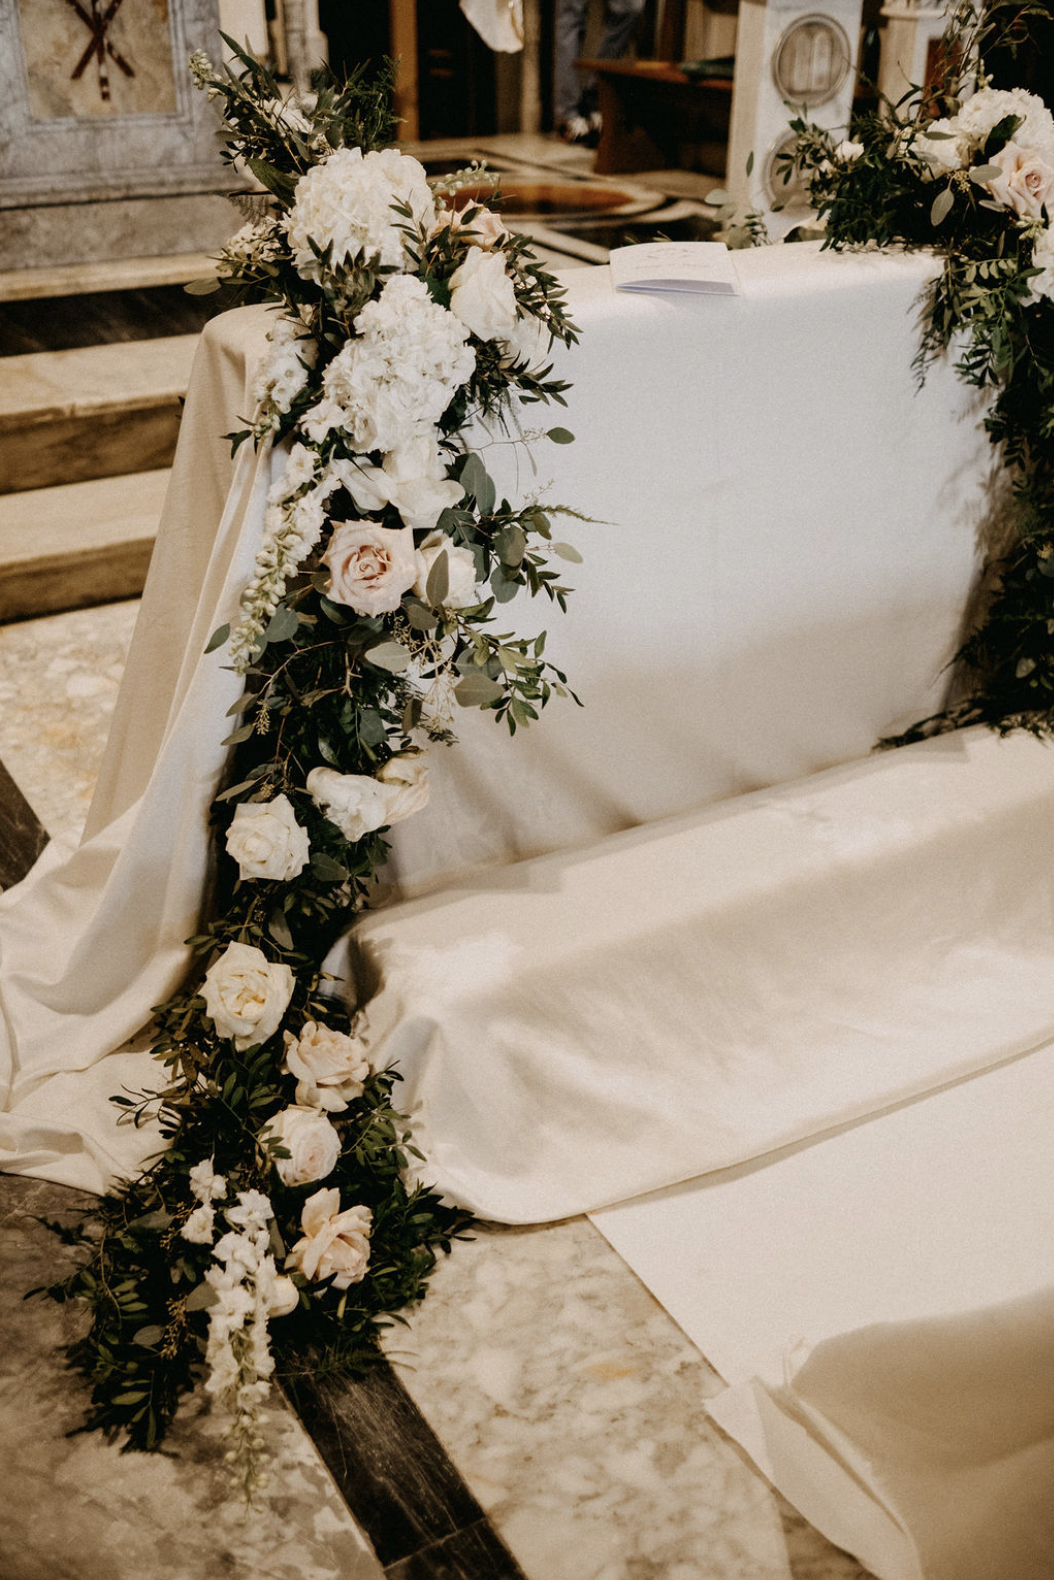 Ghirlanda di fiori per inginocchiatoio sposi con rose e ortensie bianche